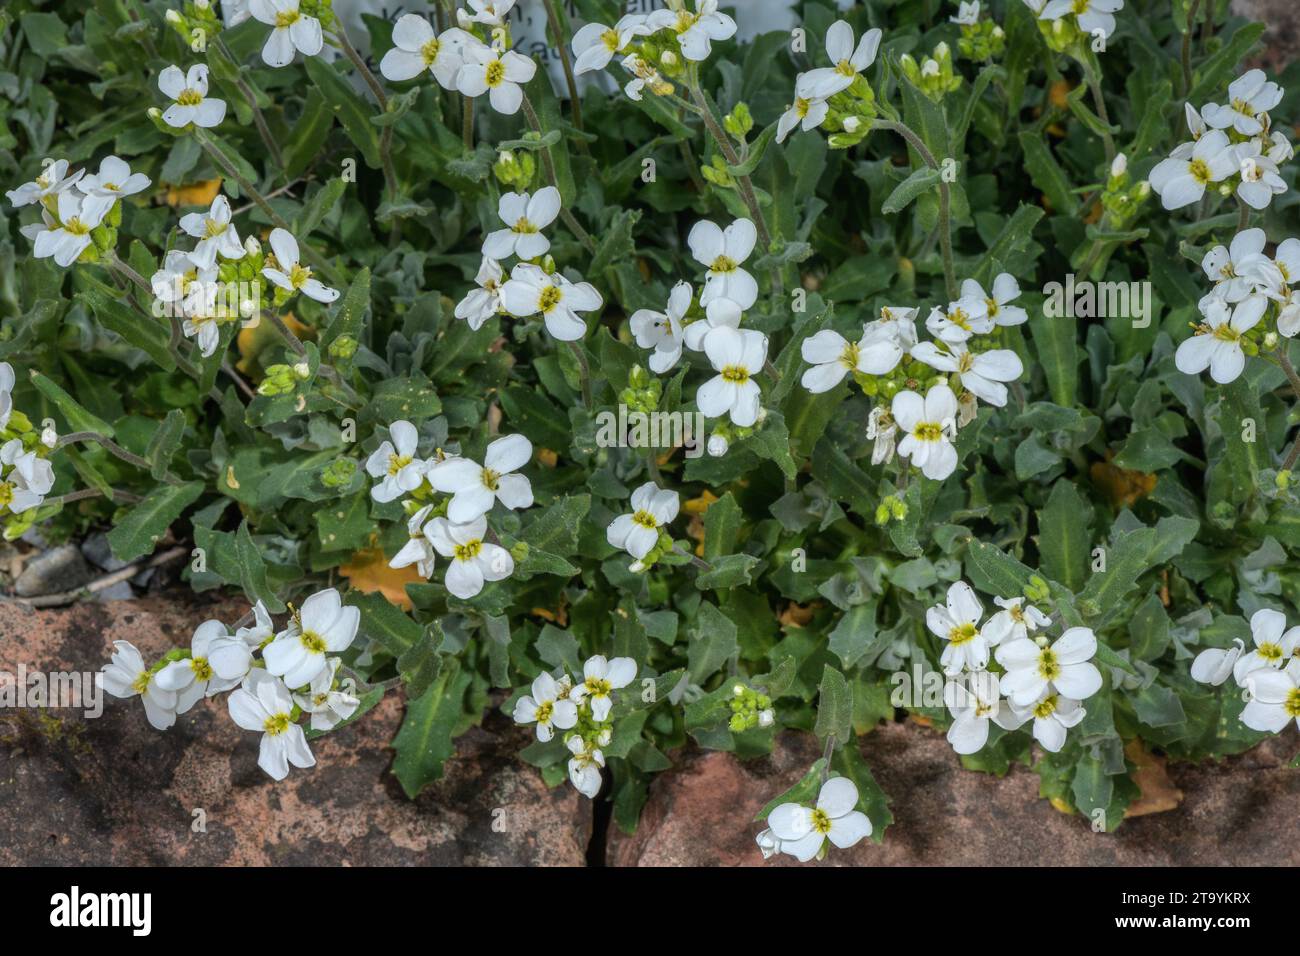 Caucasian rockcress, Arabis caucasica in flower, in cultivation. Stock Photo